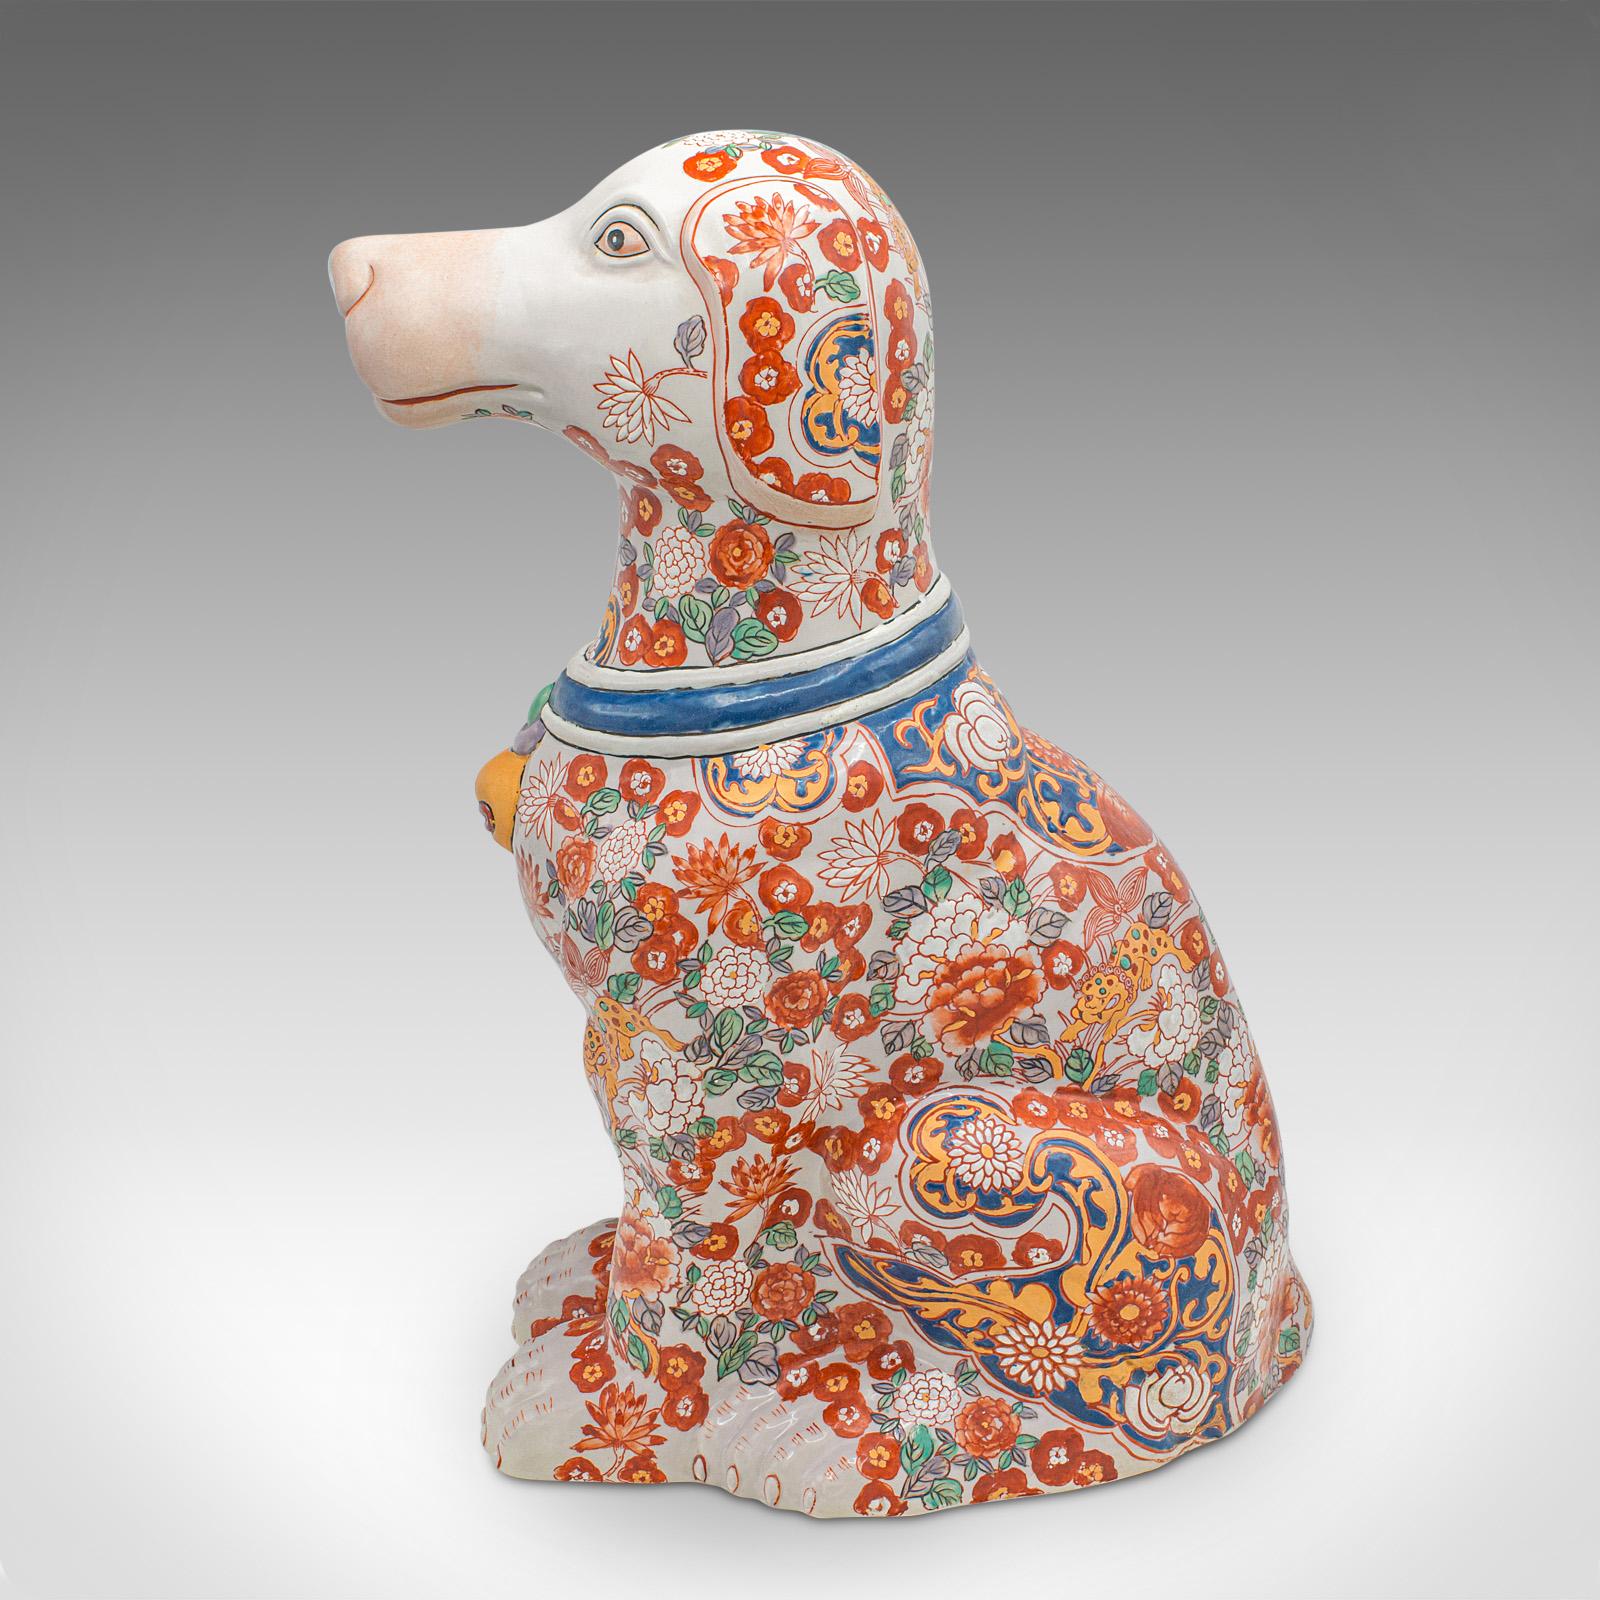 Chinese Export Large Vintage Decorative Dog Figure, Chinese, Ceramic, Hound Statue, Imari Taste